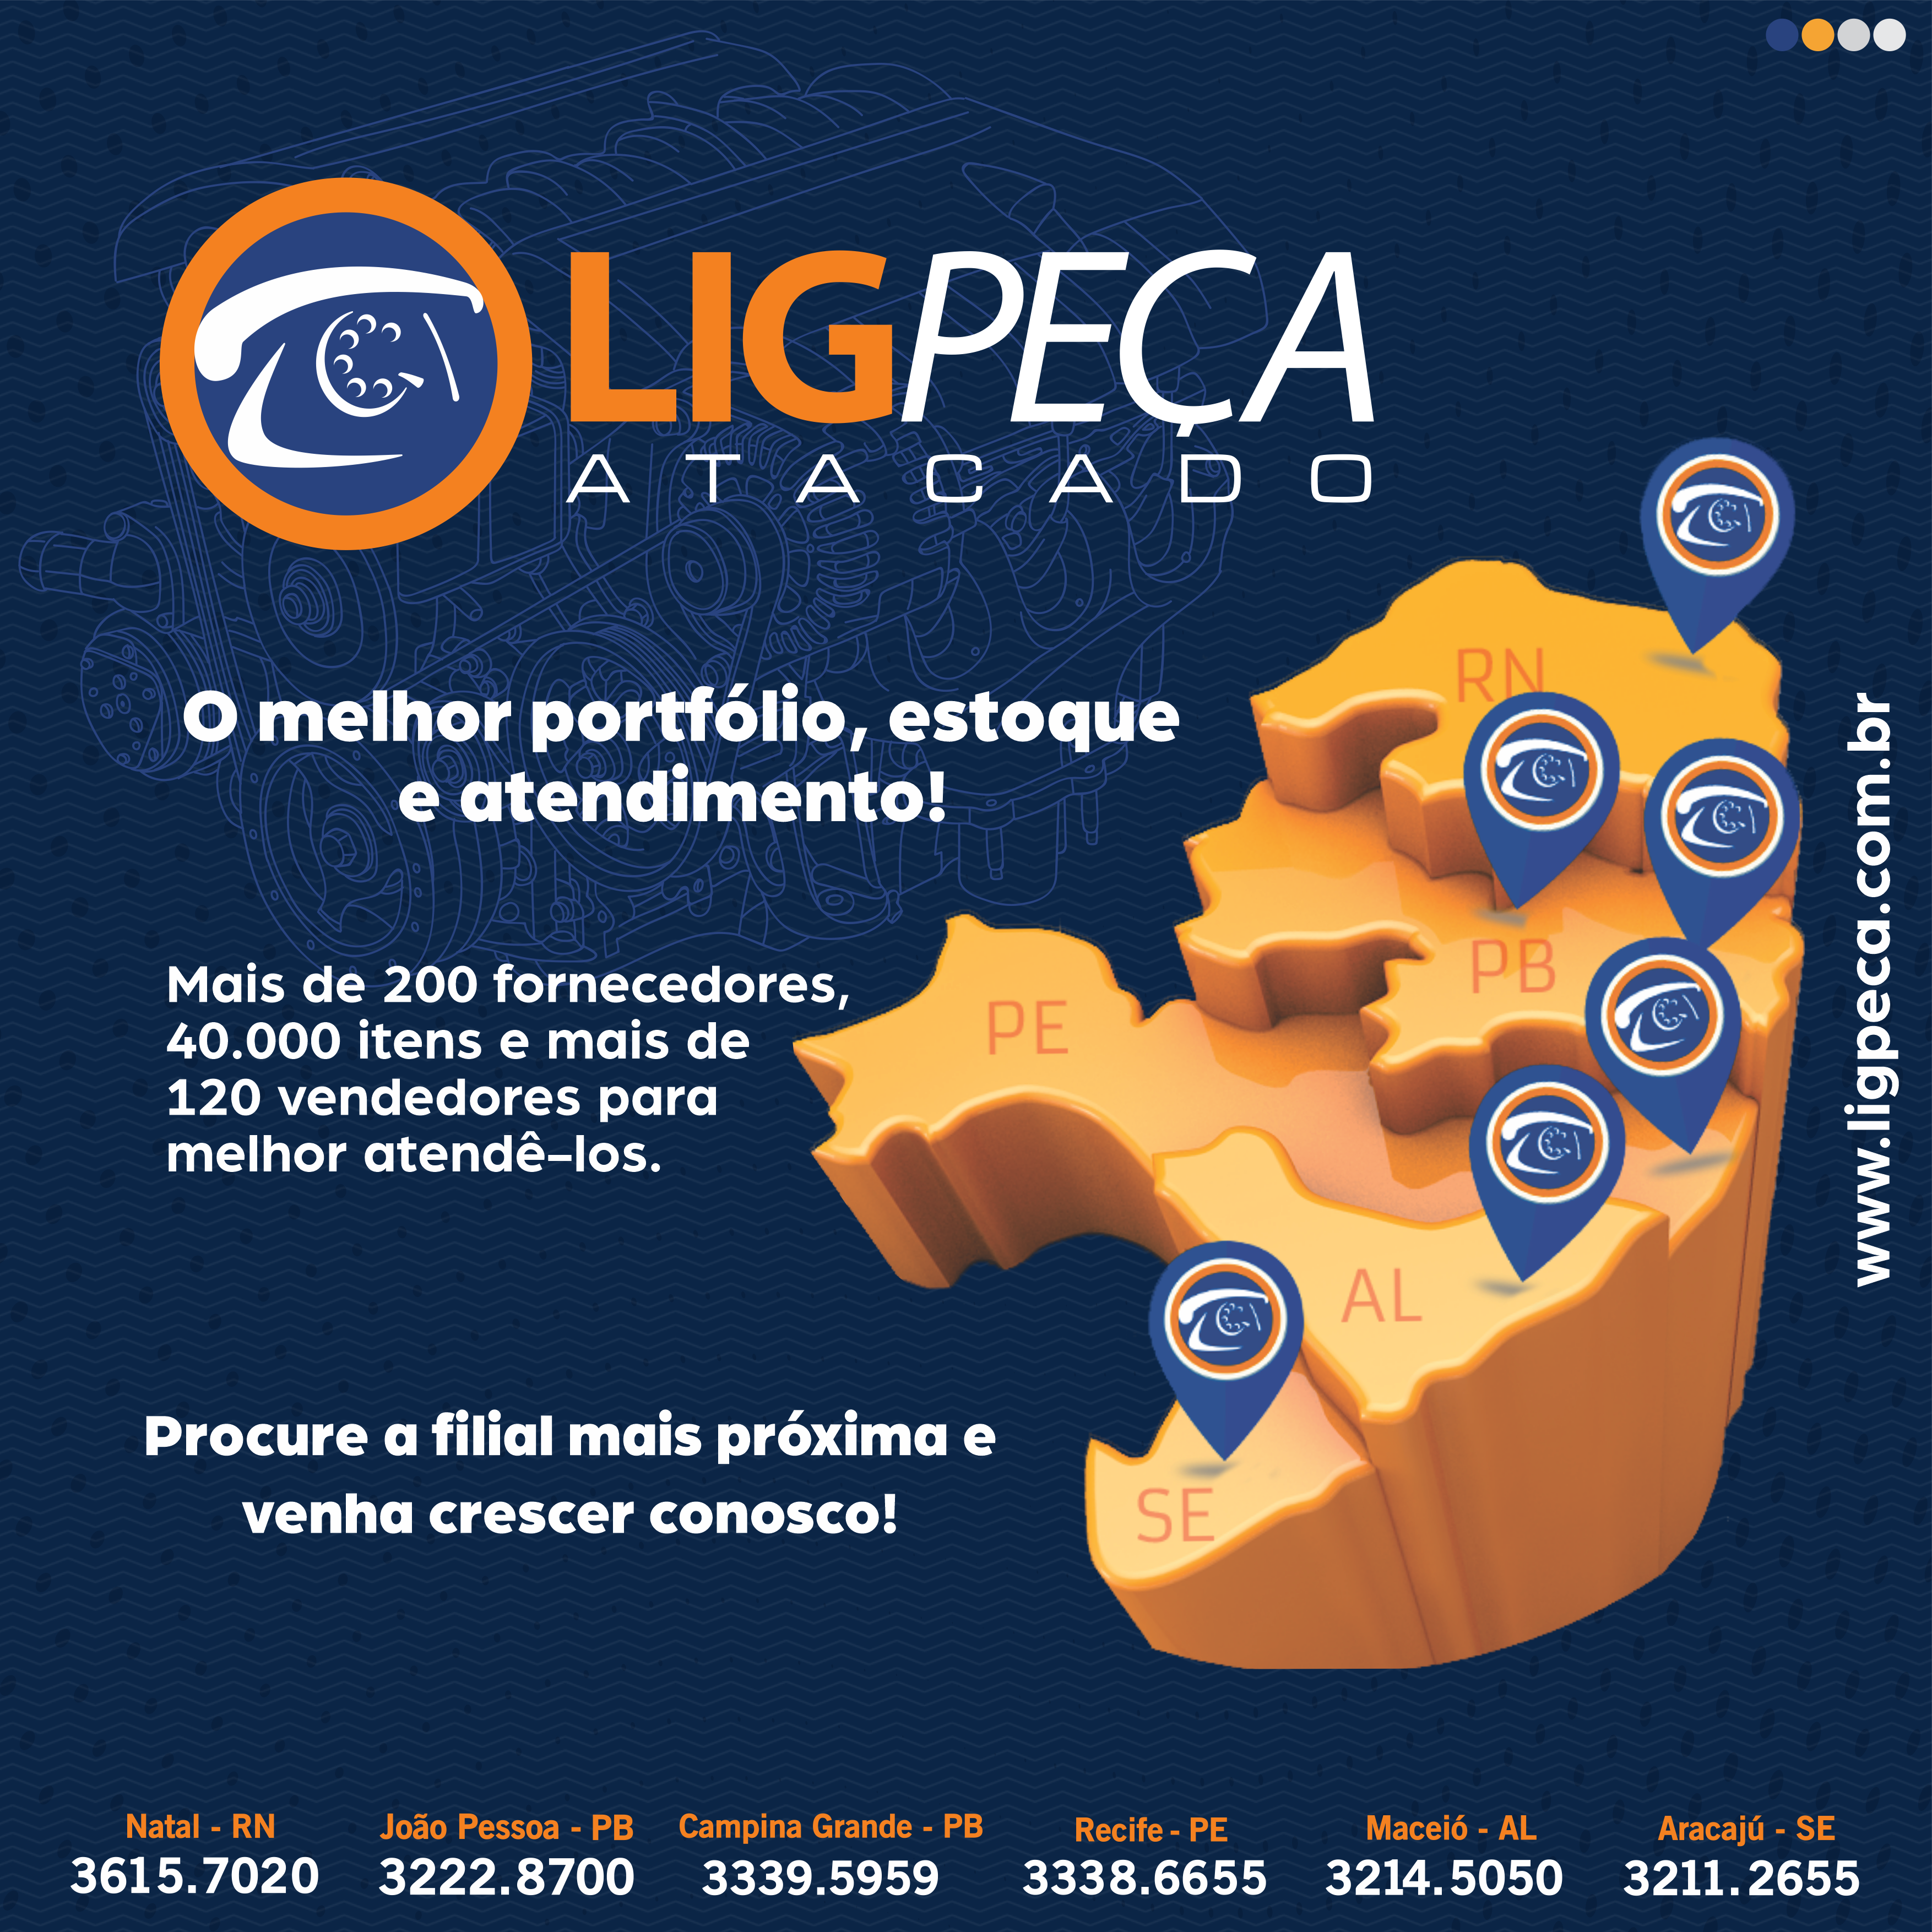 (c) Ligpeca.com.br